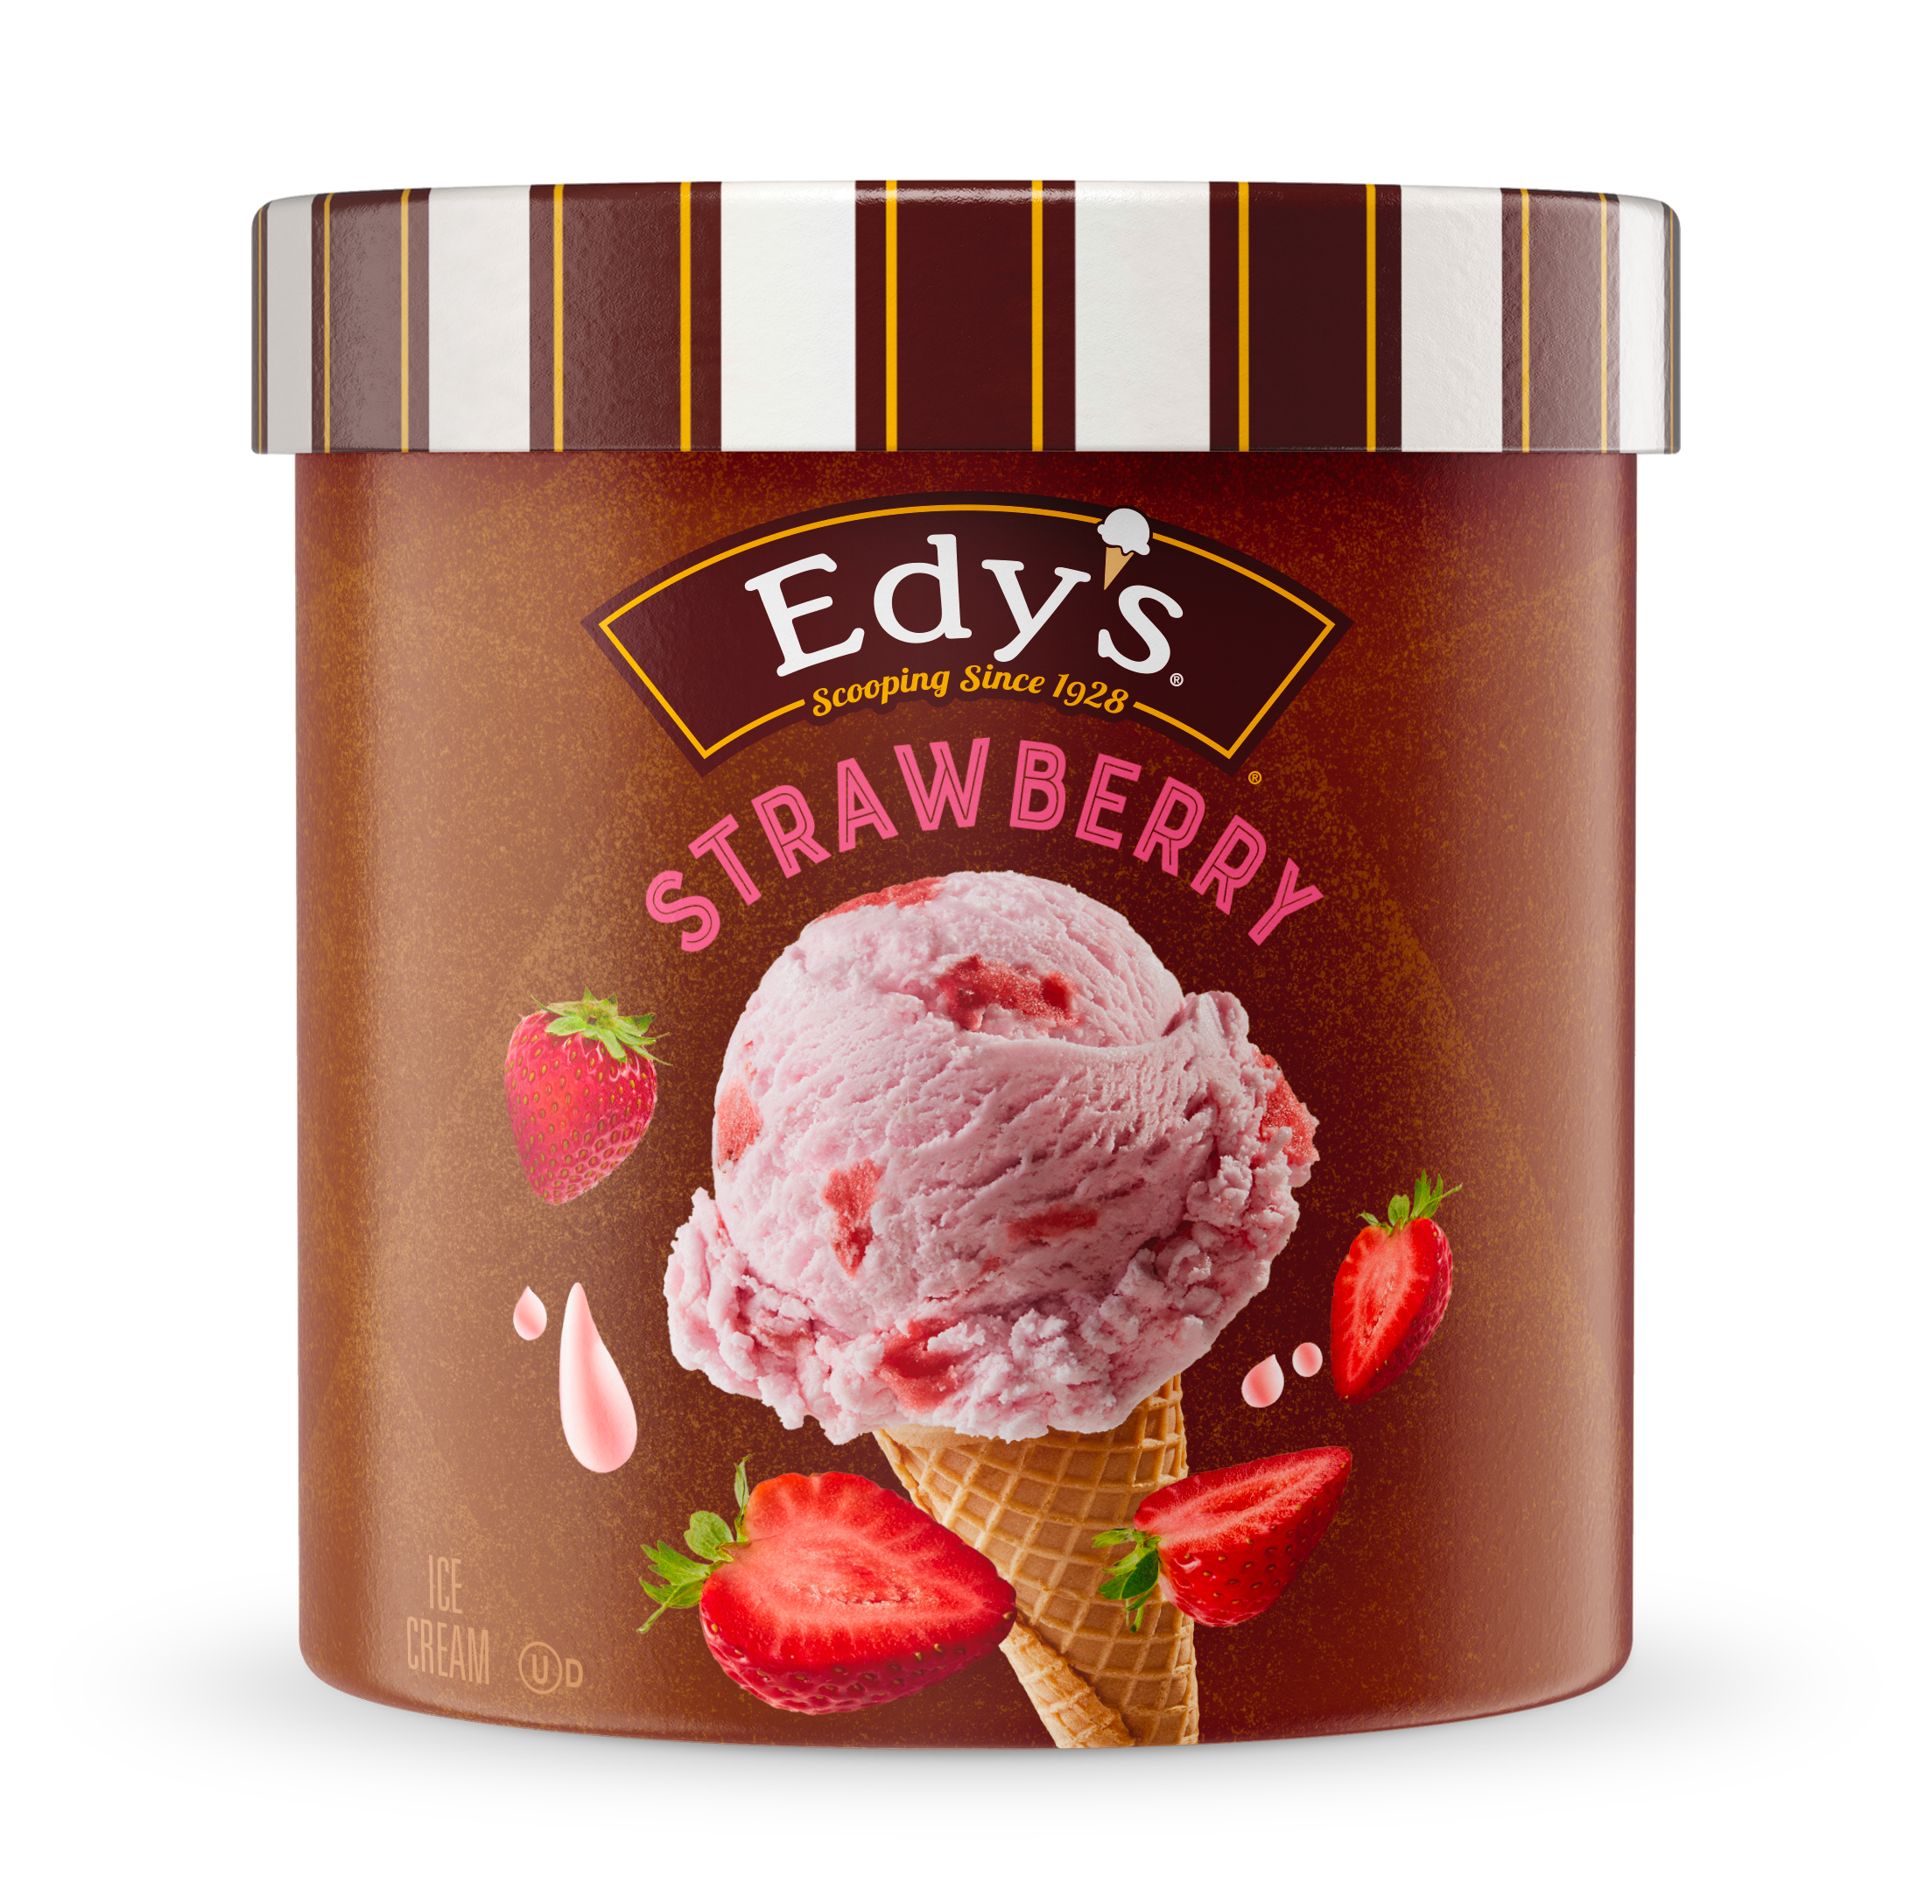 Carton of Edy's strawberry ice cream